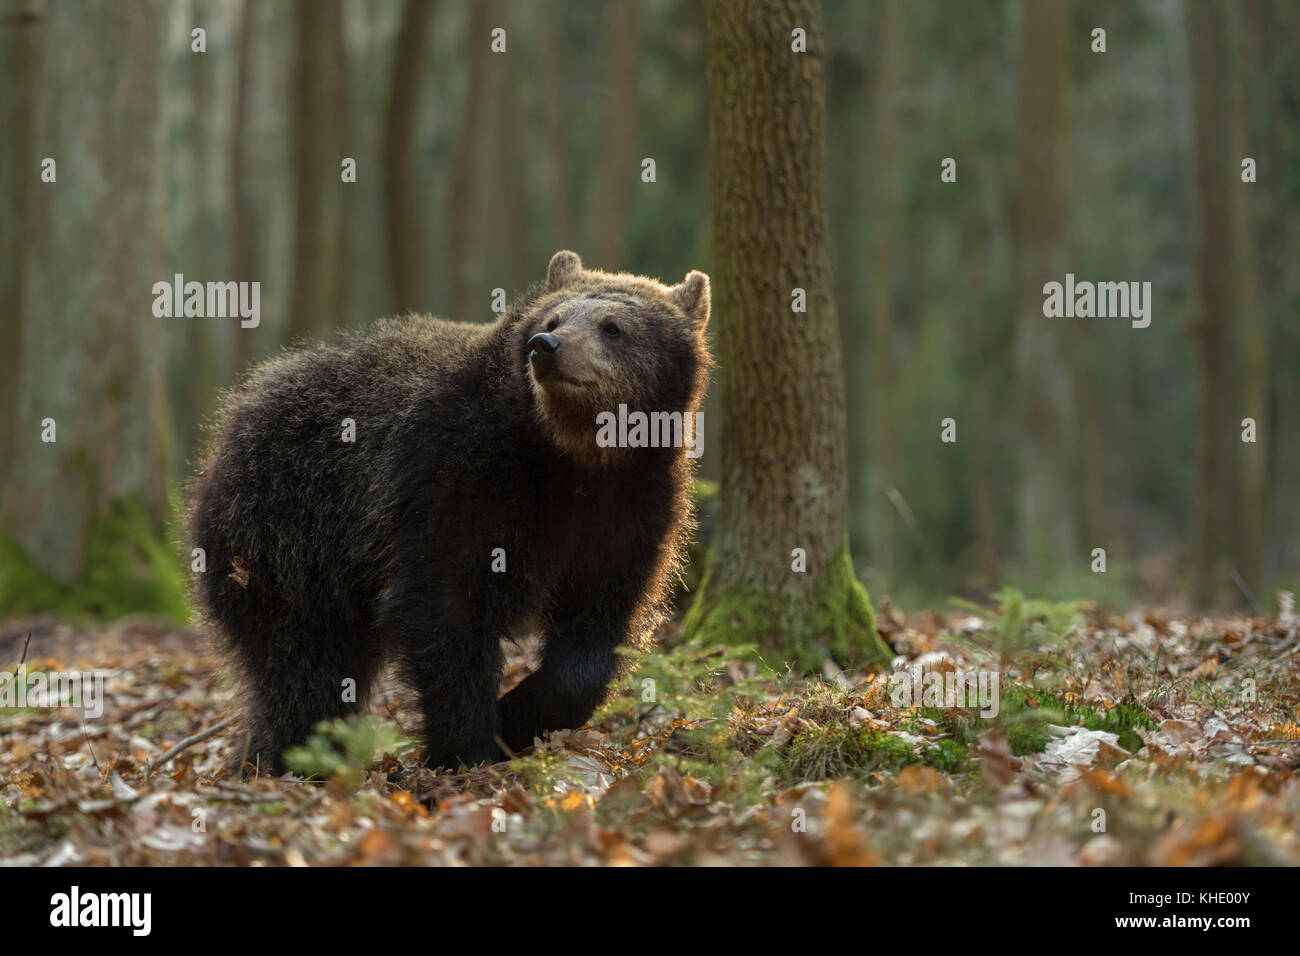 European Brown Bear / Europaeischer Braunbaer ( Ursus arctos ), young animal, strolling through its habitat, in natural surrounding, Europe. Stock Photo